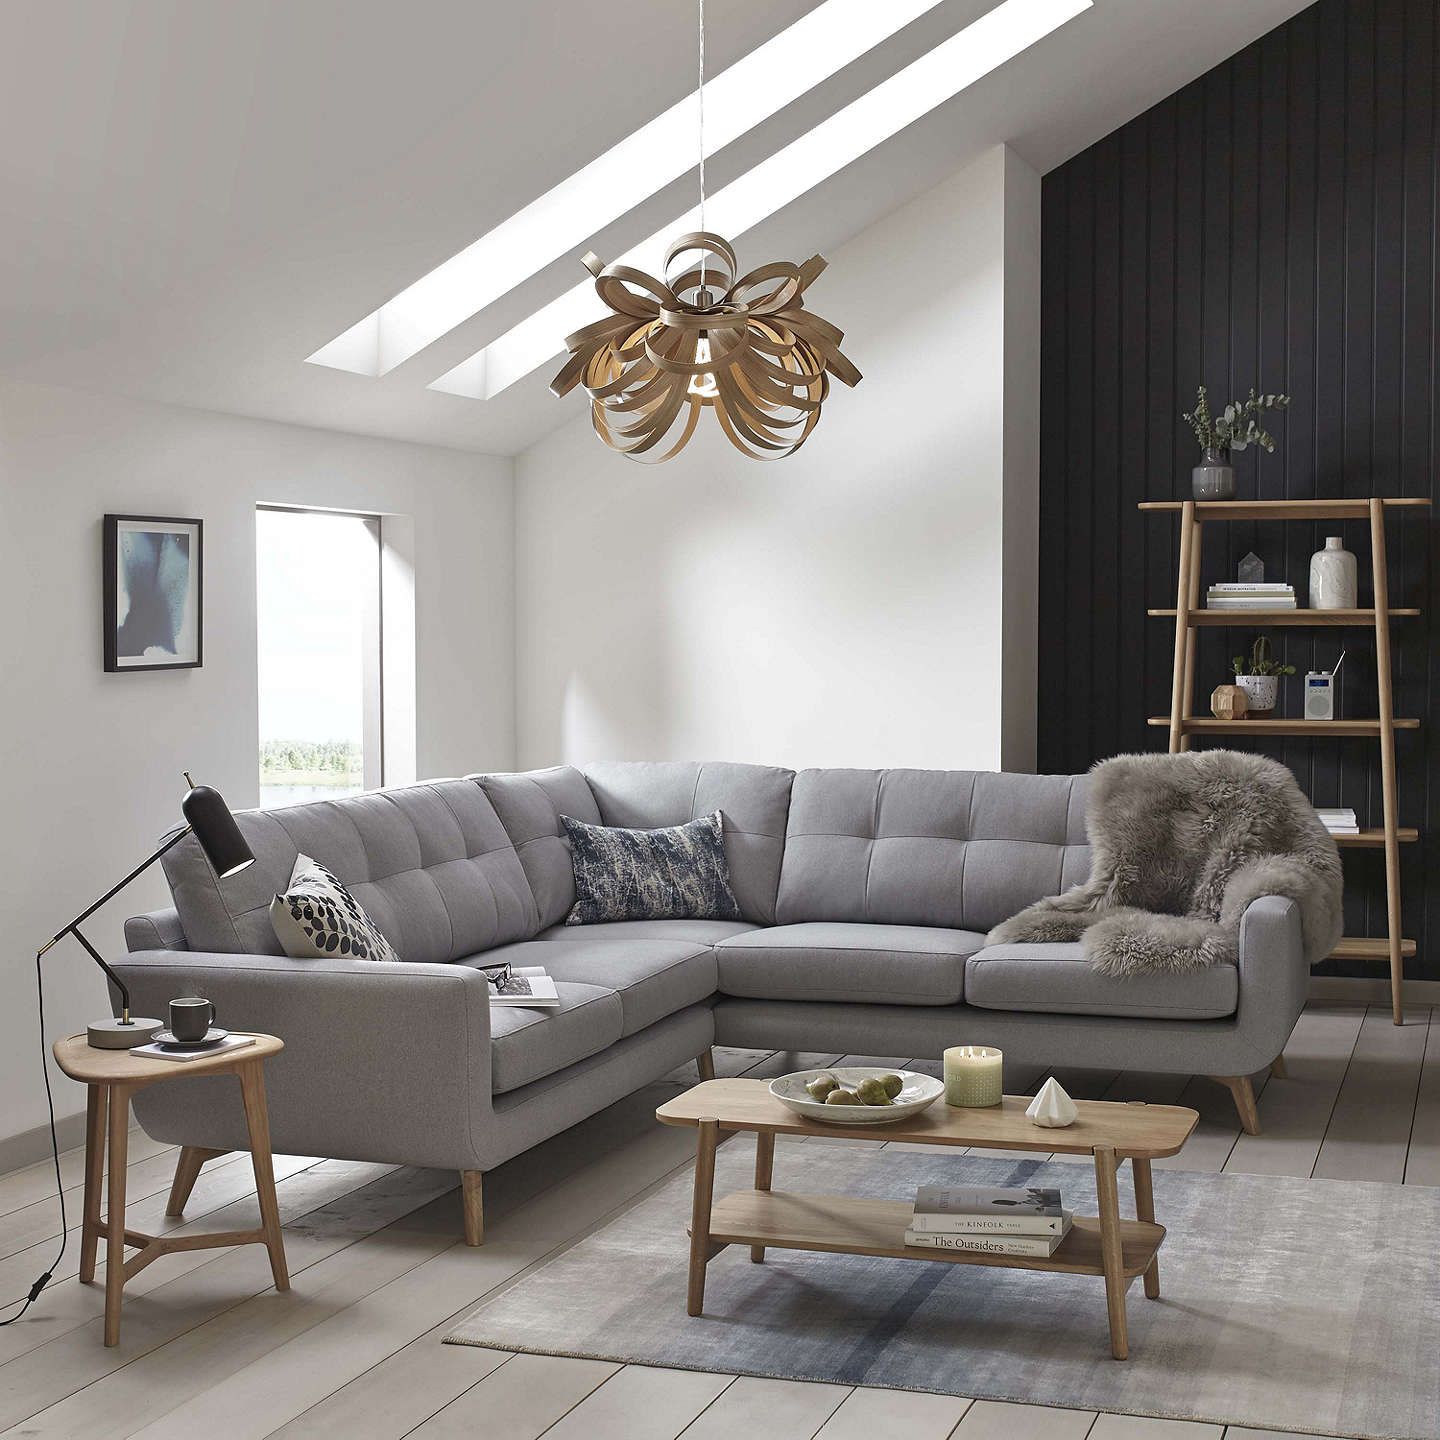 Innovative Ways to Arrange Your Corner
Leather Sofa for Maximum Comfort